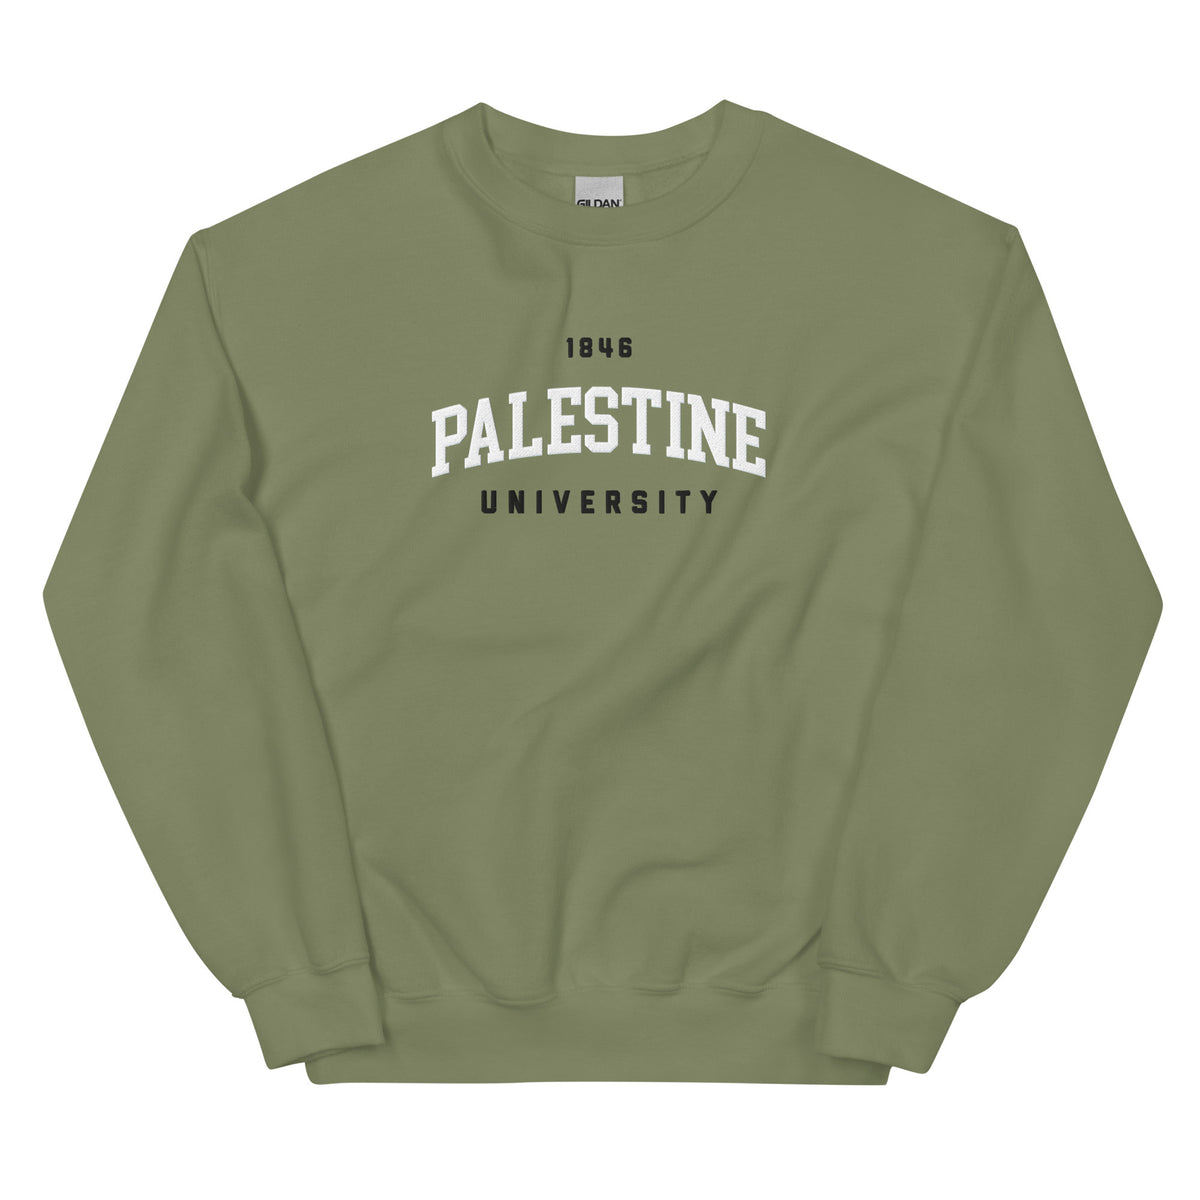 Palestine University 1846 sweatshirt in green by Dar Collective